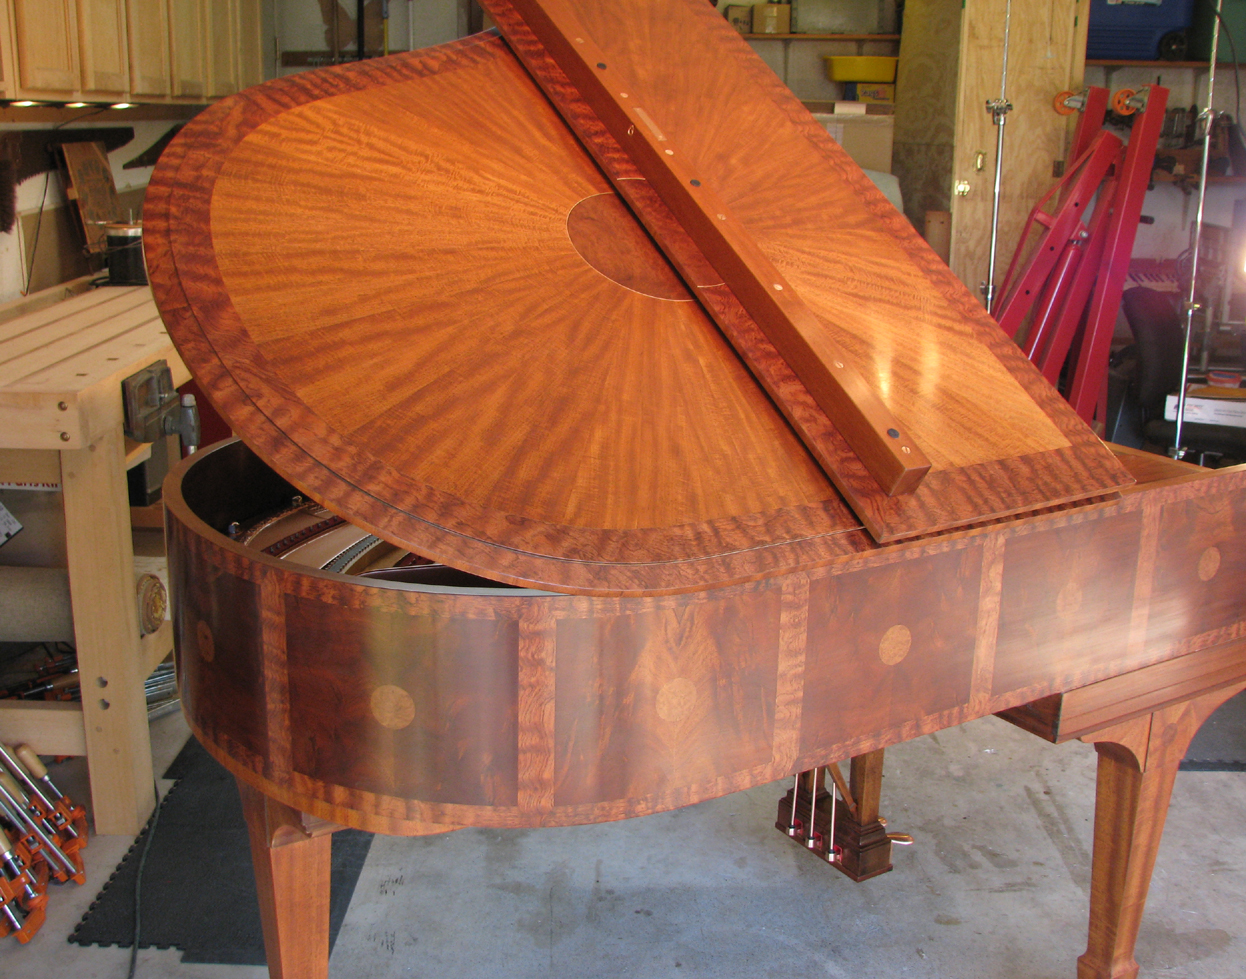  Steinway &amp; Sons "Sunburst" veneer project. Veneer design and execution by Watson Piano Works, 2015. 